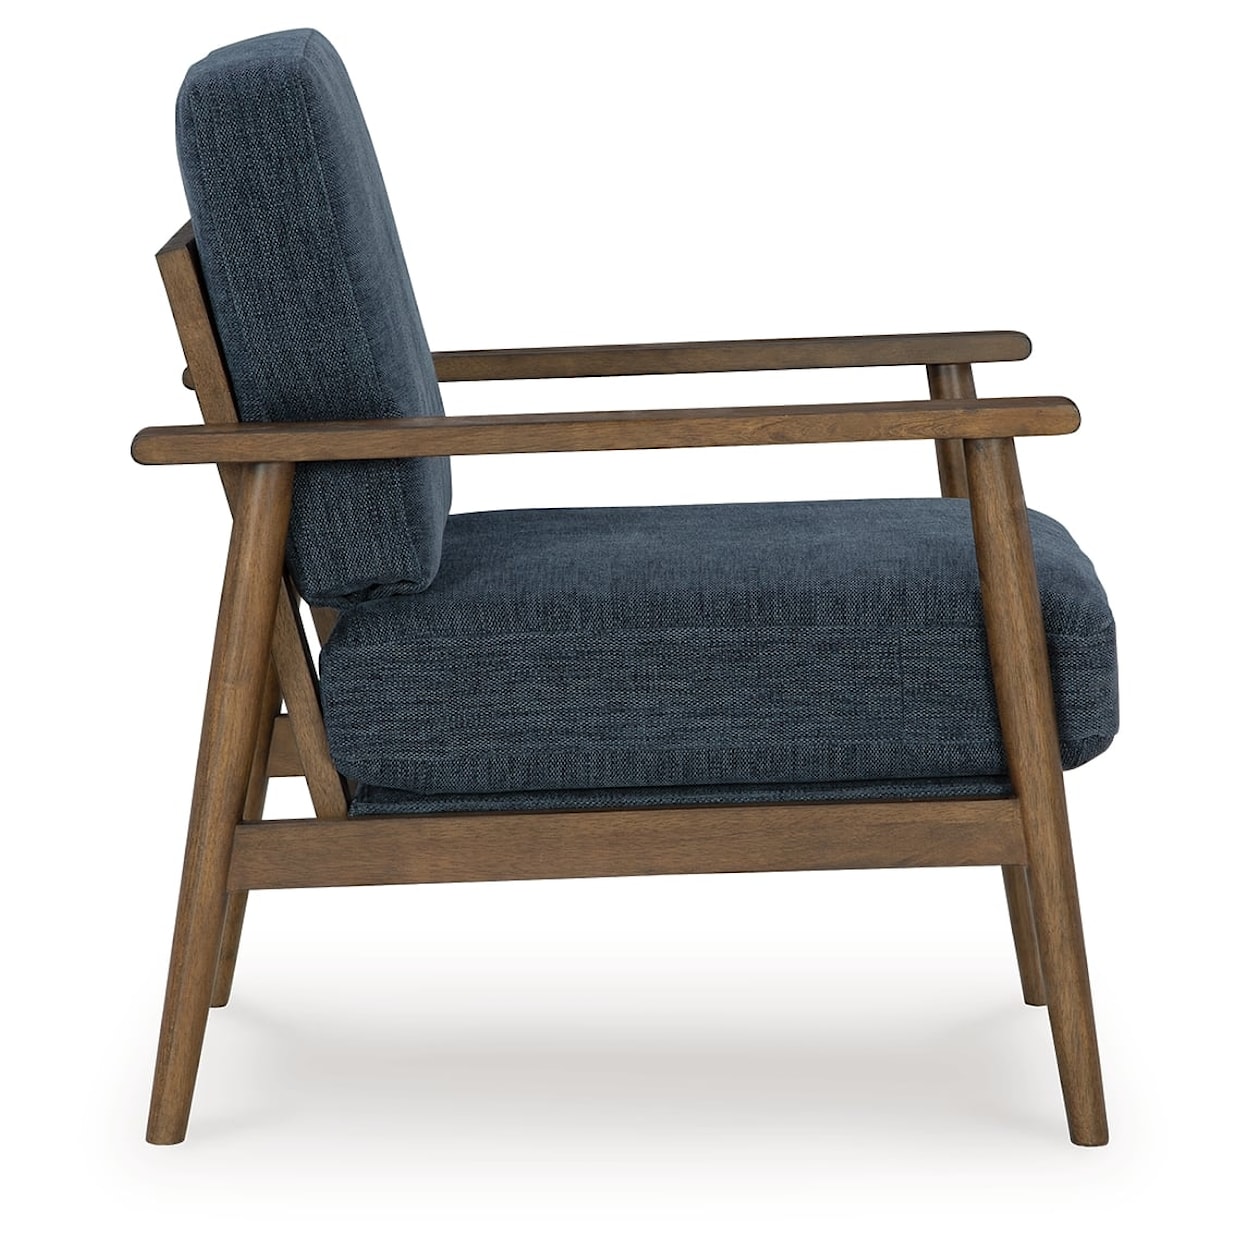 StyleLine Bixler Showood Accent Chair